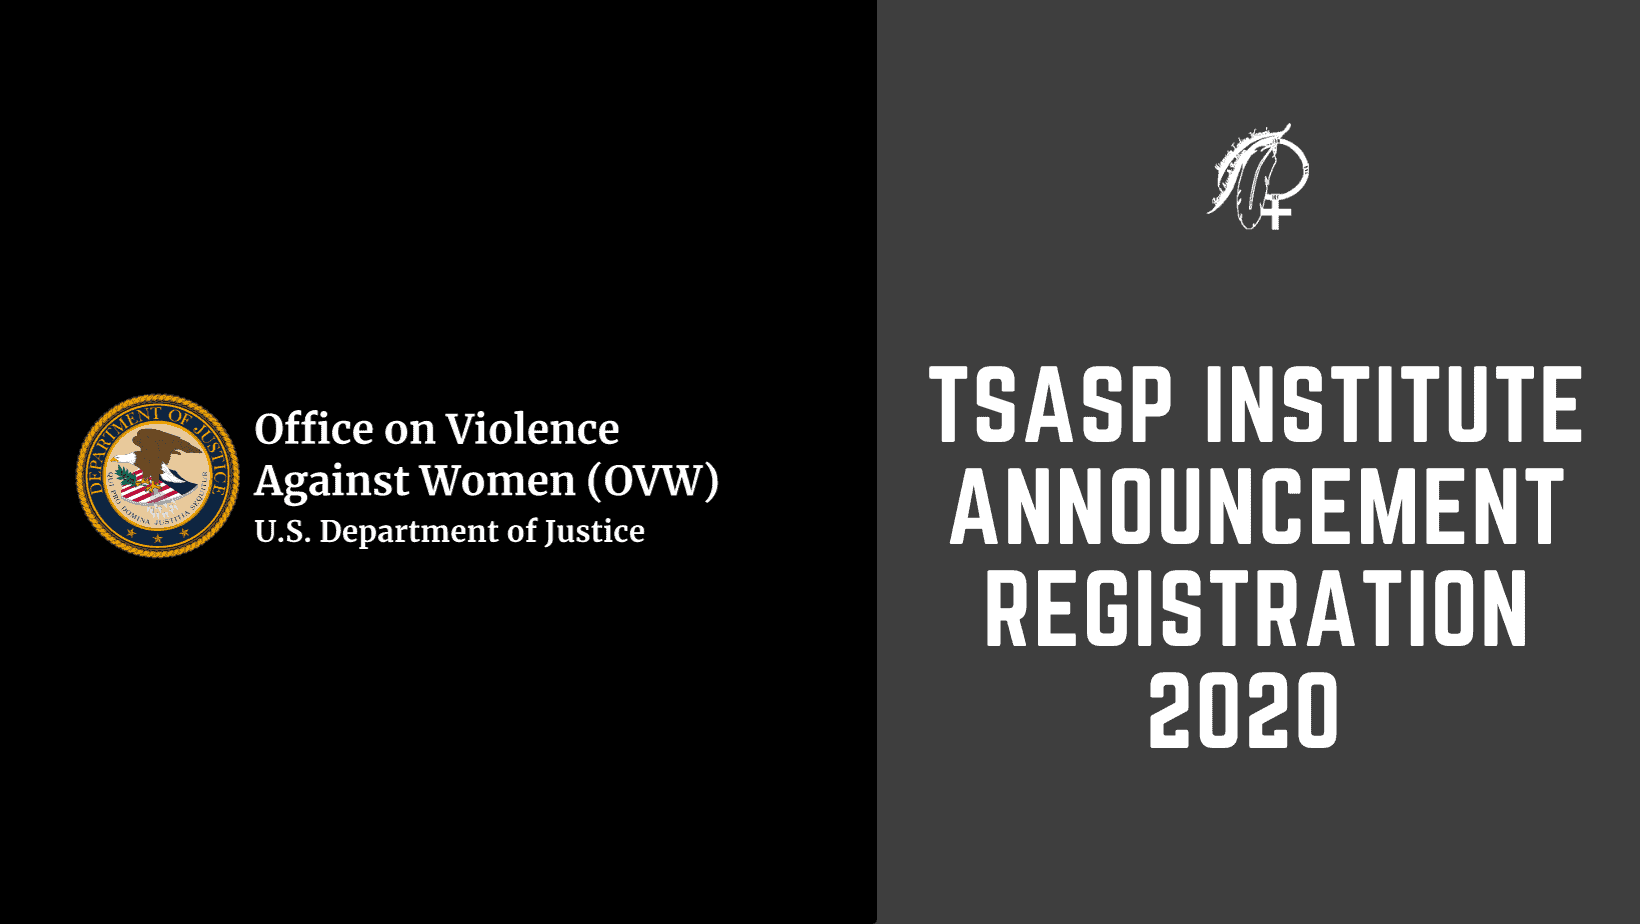 TSASP Institute Announcement Registration 2020